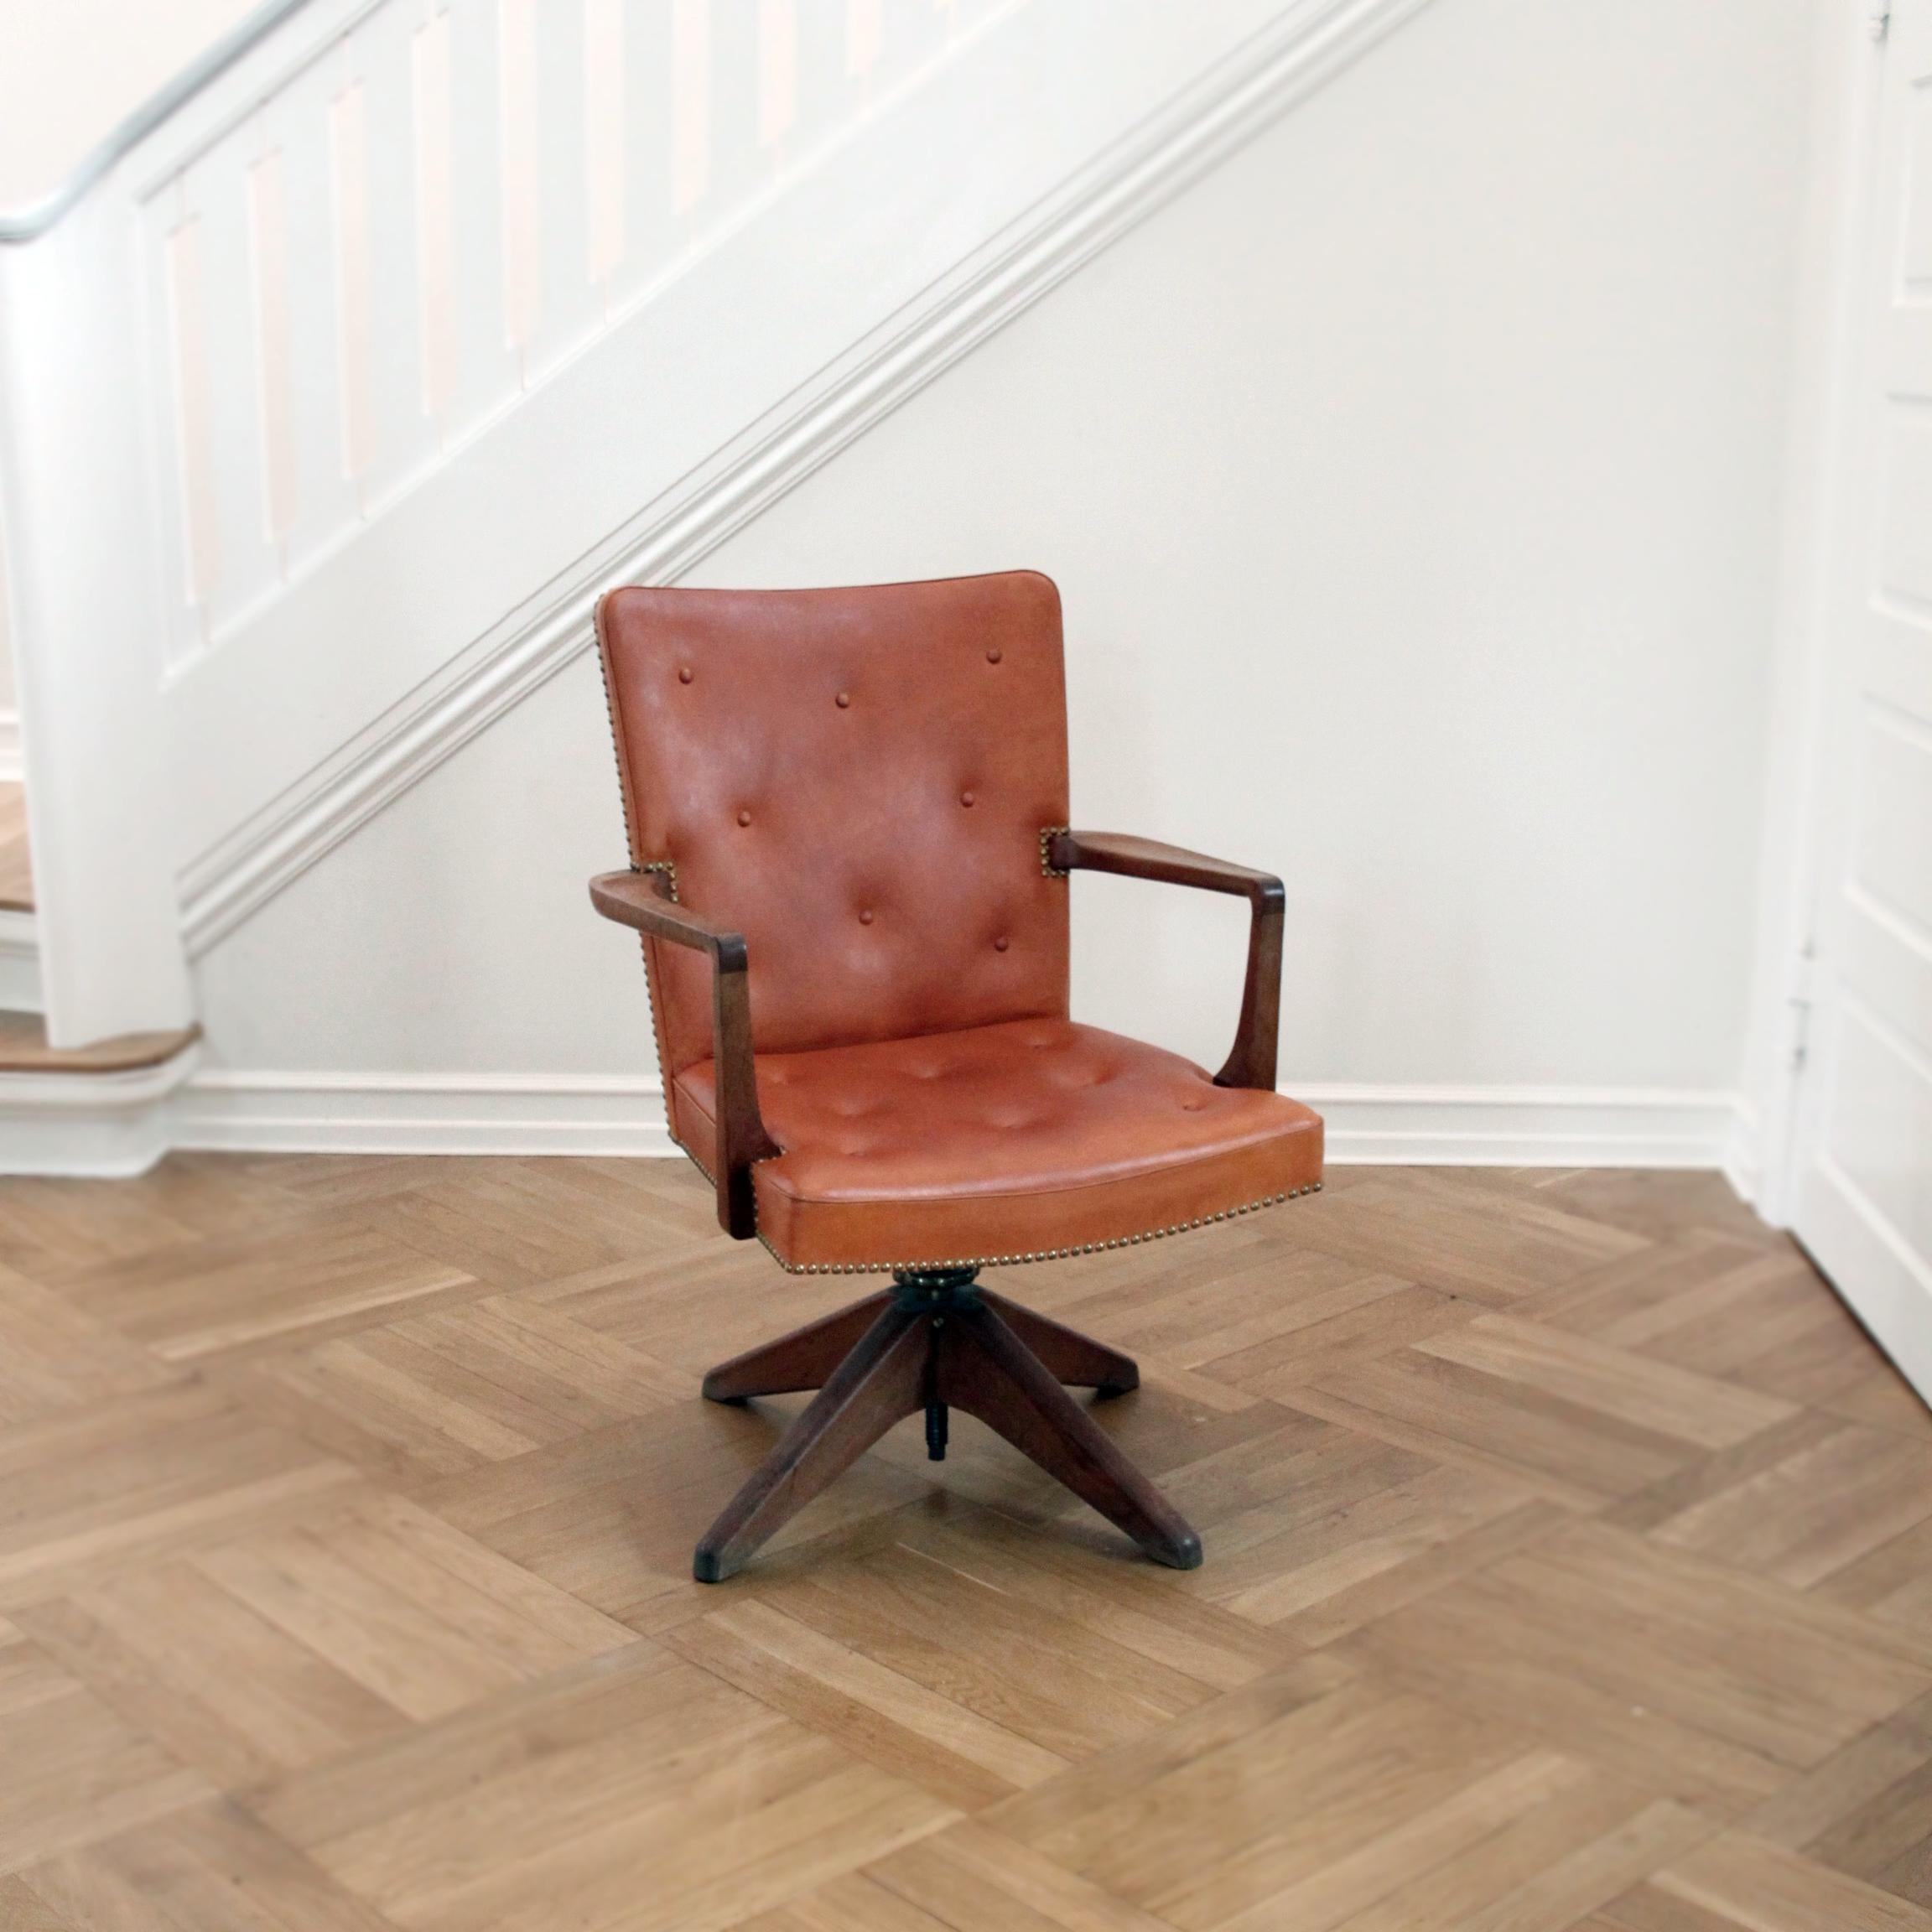 Laiton Rare Executive Desk Chair in Walnut, Brass and Leather, Palle Suenson, 1940s en vente